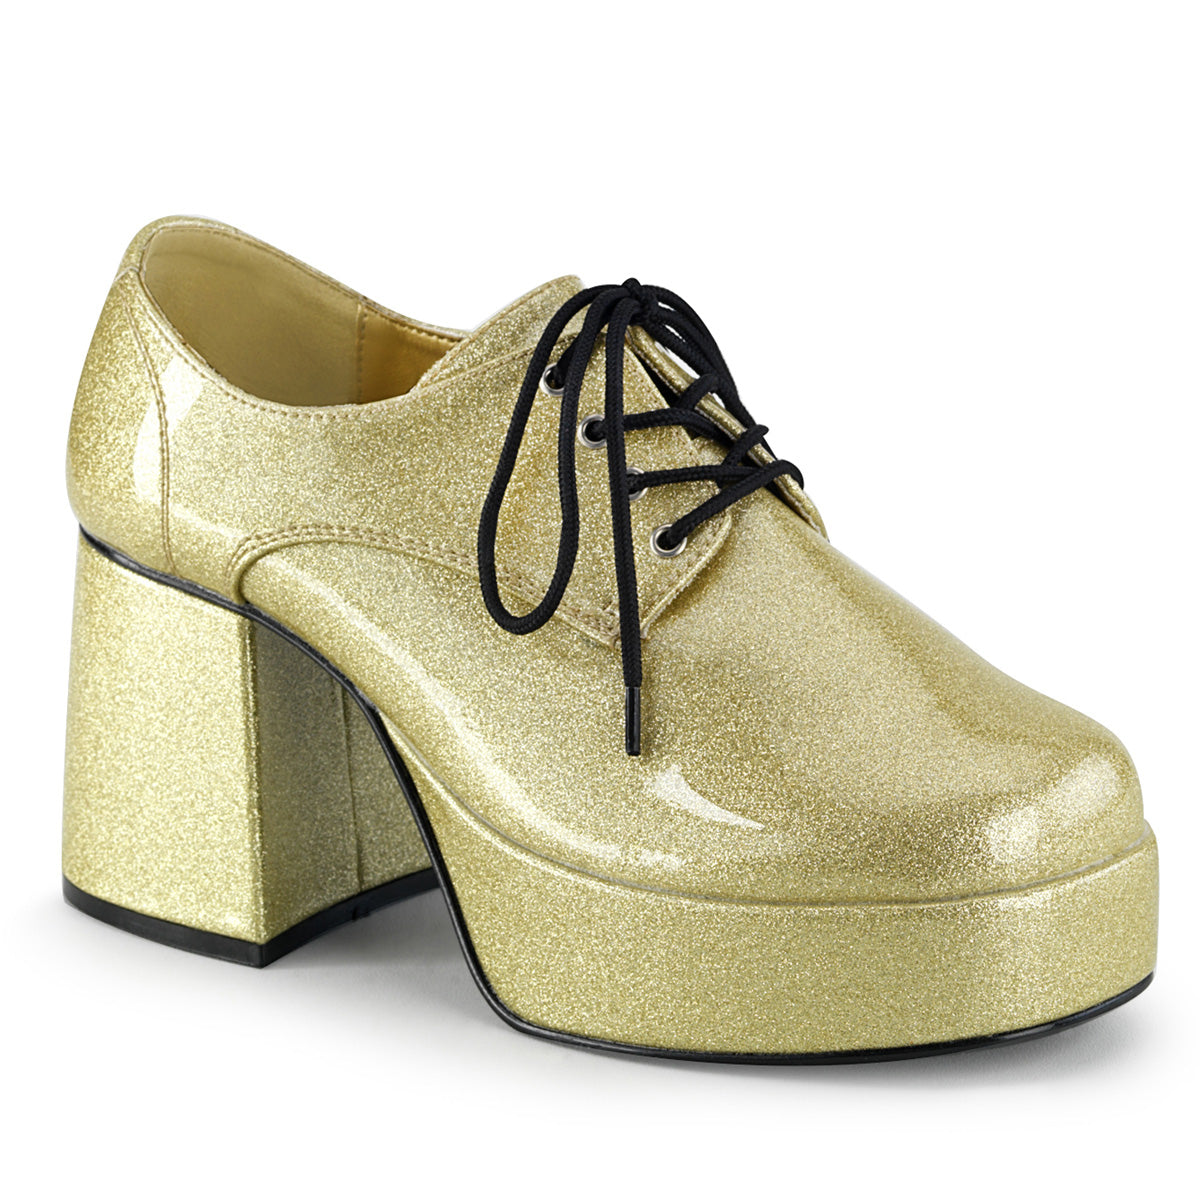 Funtasma Zapato de hombre bajo JAZZ-02g Pearled Gold Gltr